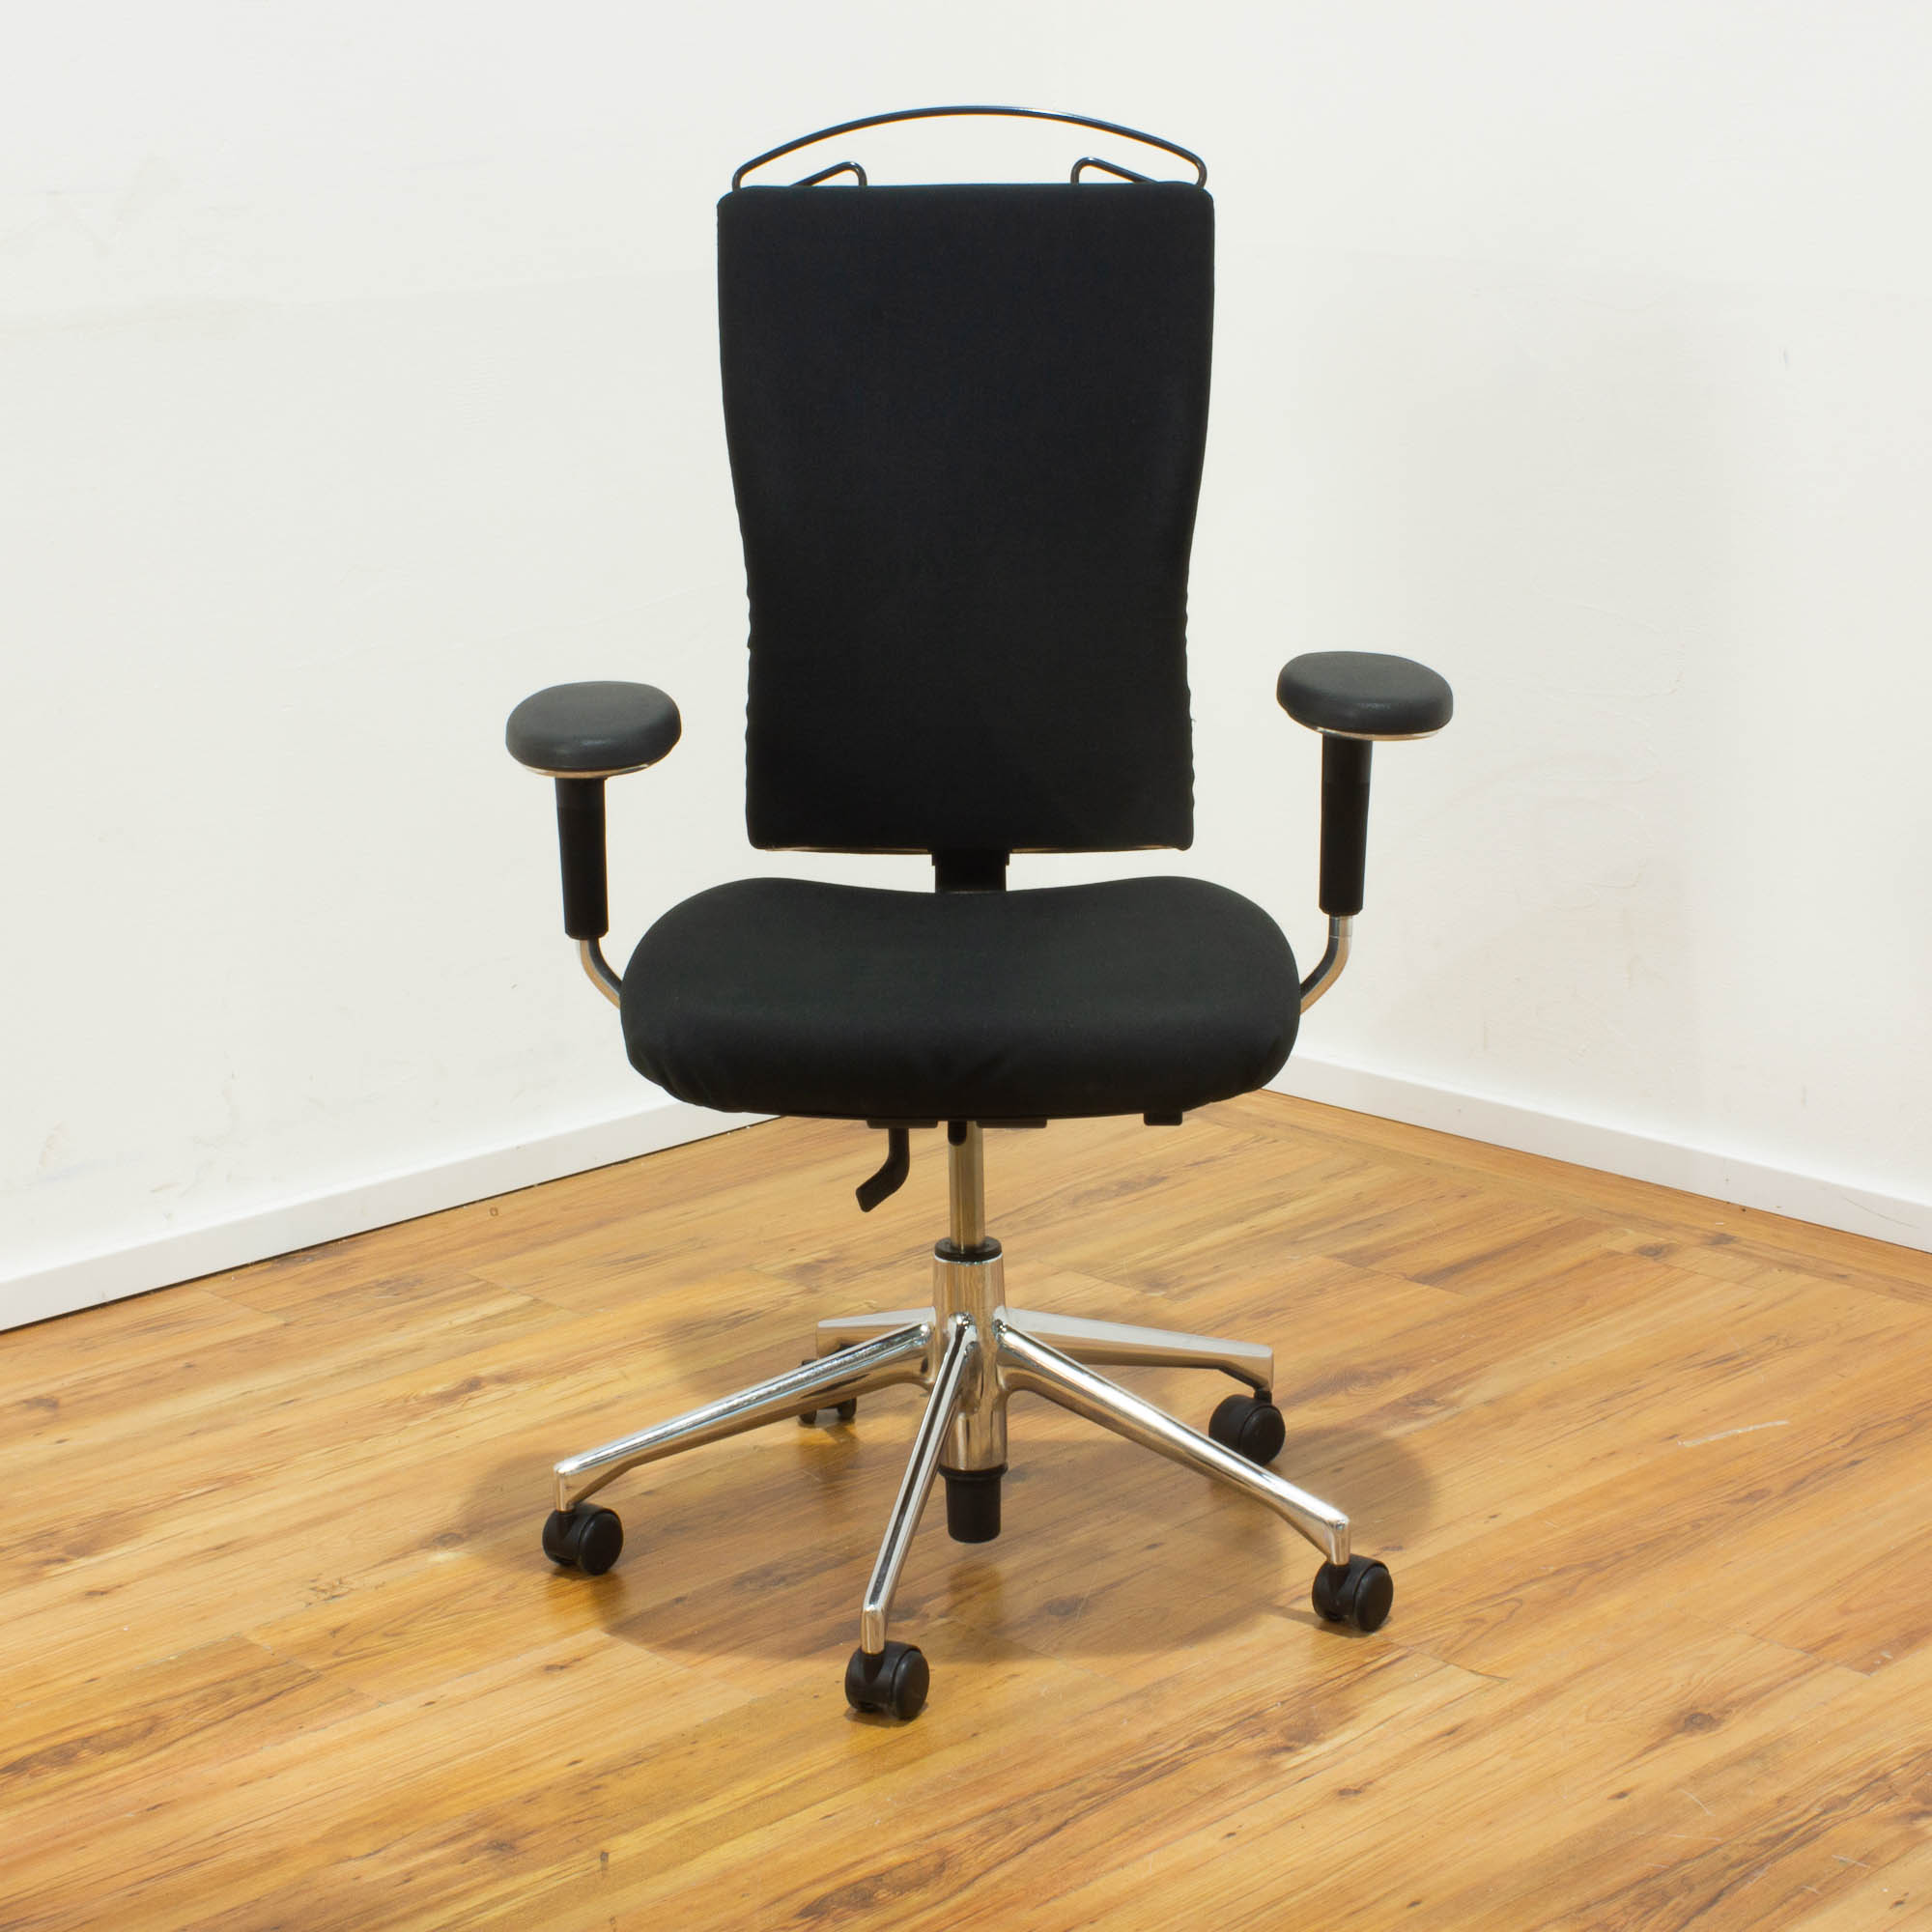 Vitra T-Chair - Bezug Stoff schwarz - 5-Sternfußgestell chrom